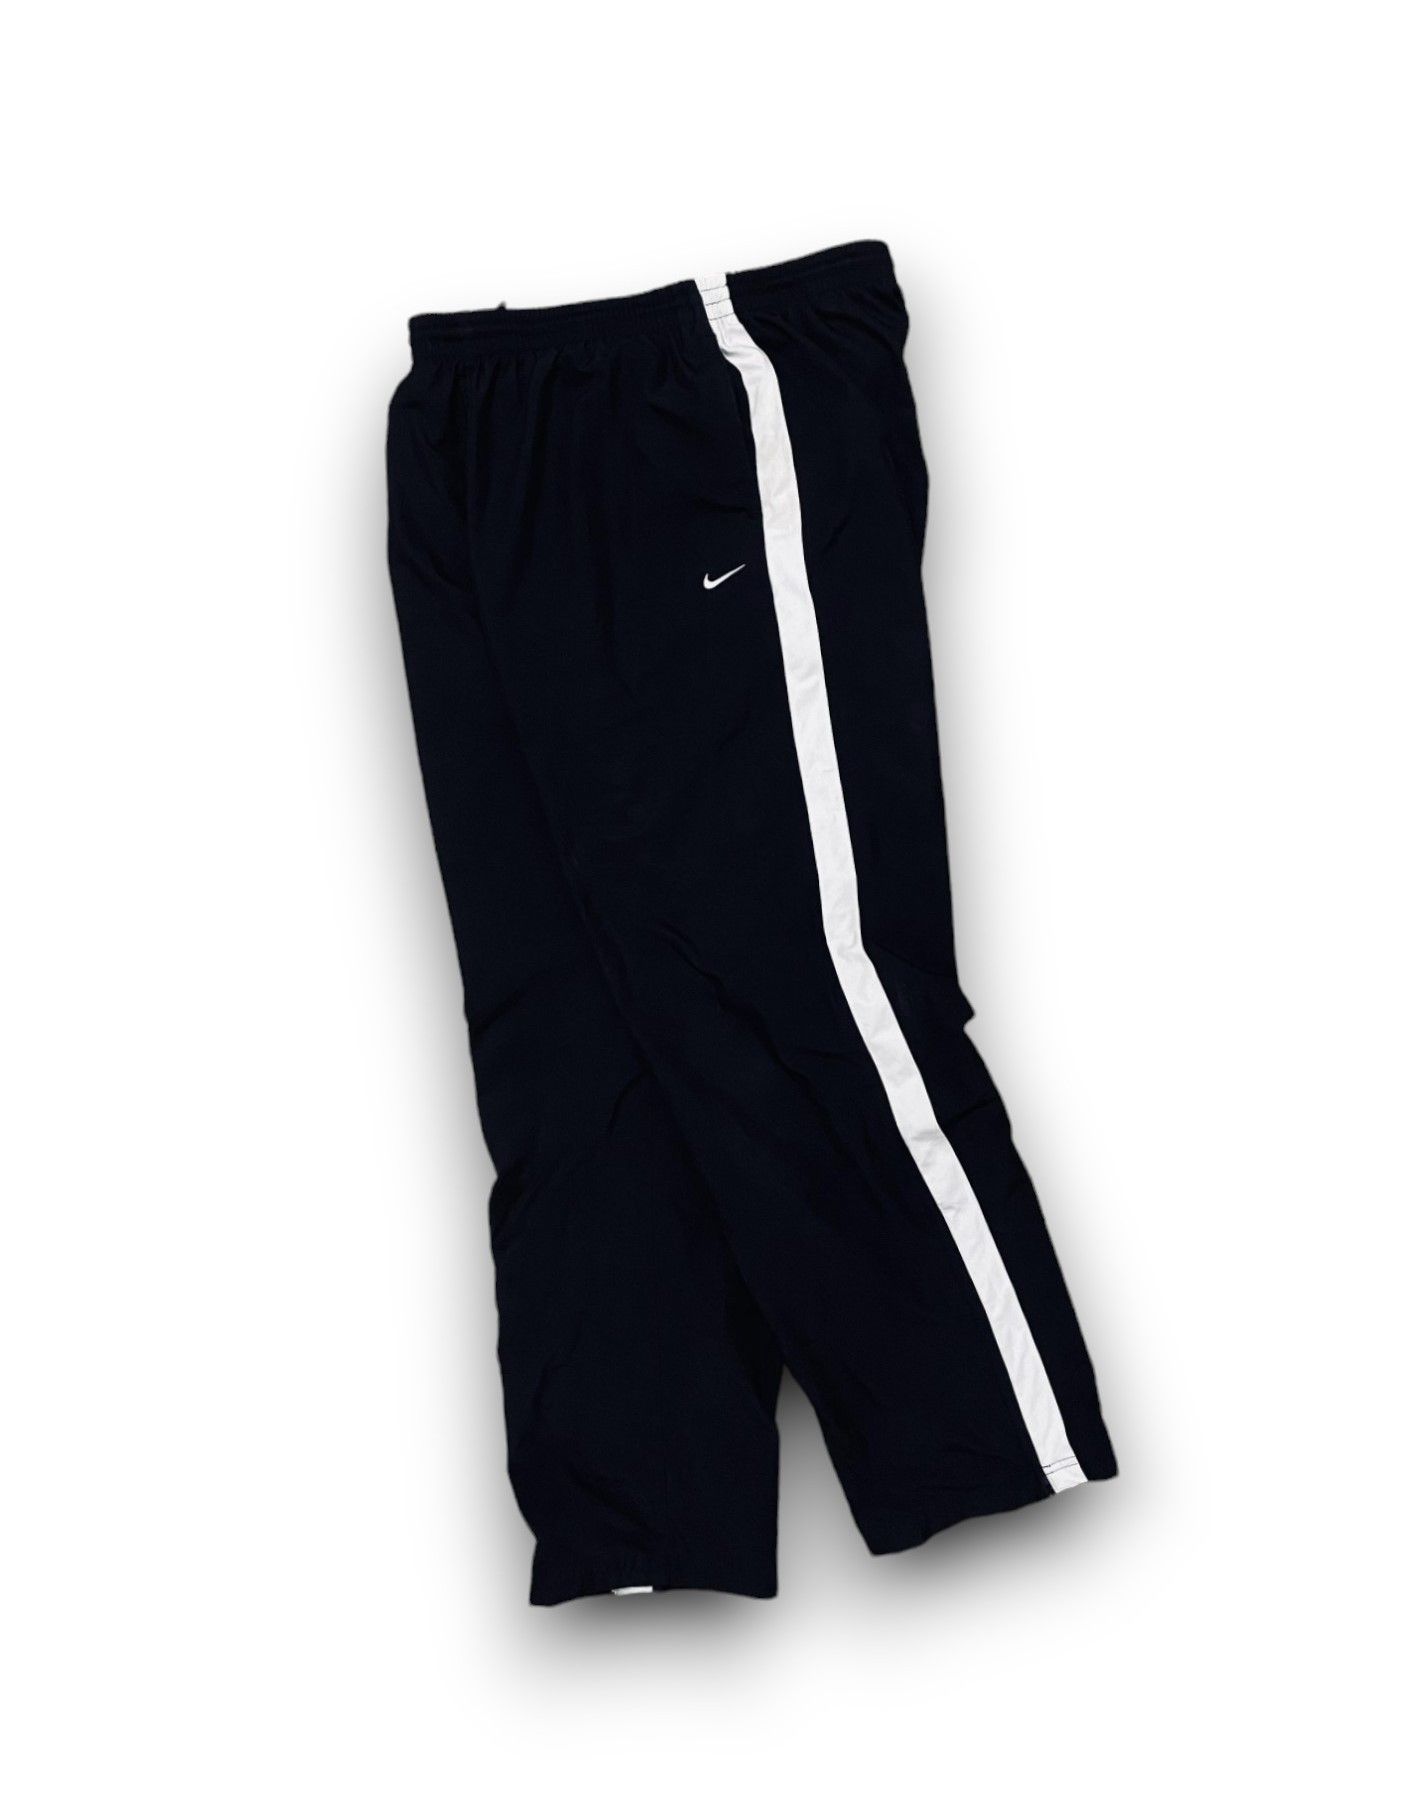 Nike Track Pants Y2K Black Side Stripe Men's L - 2